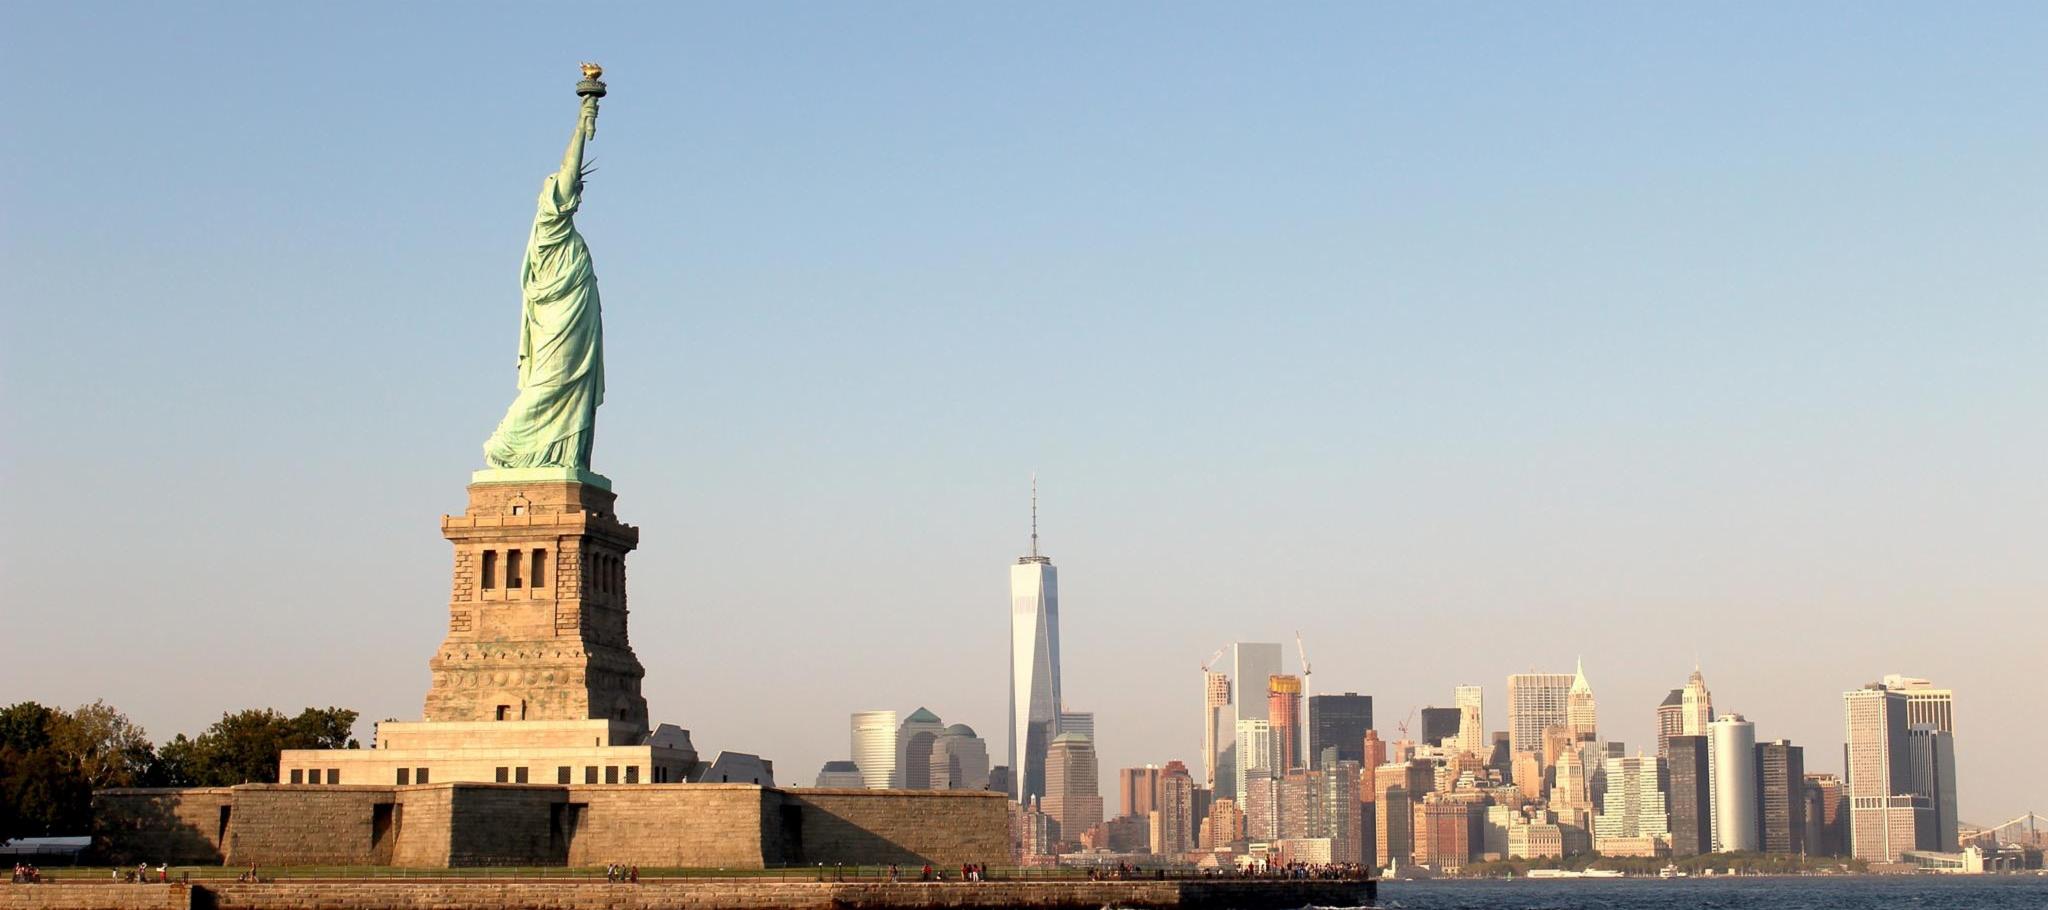 Statue of Liberty New York